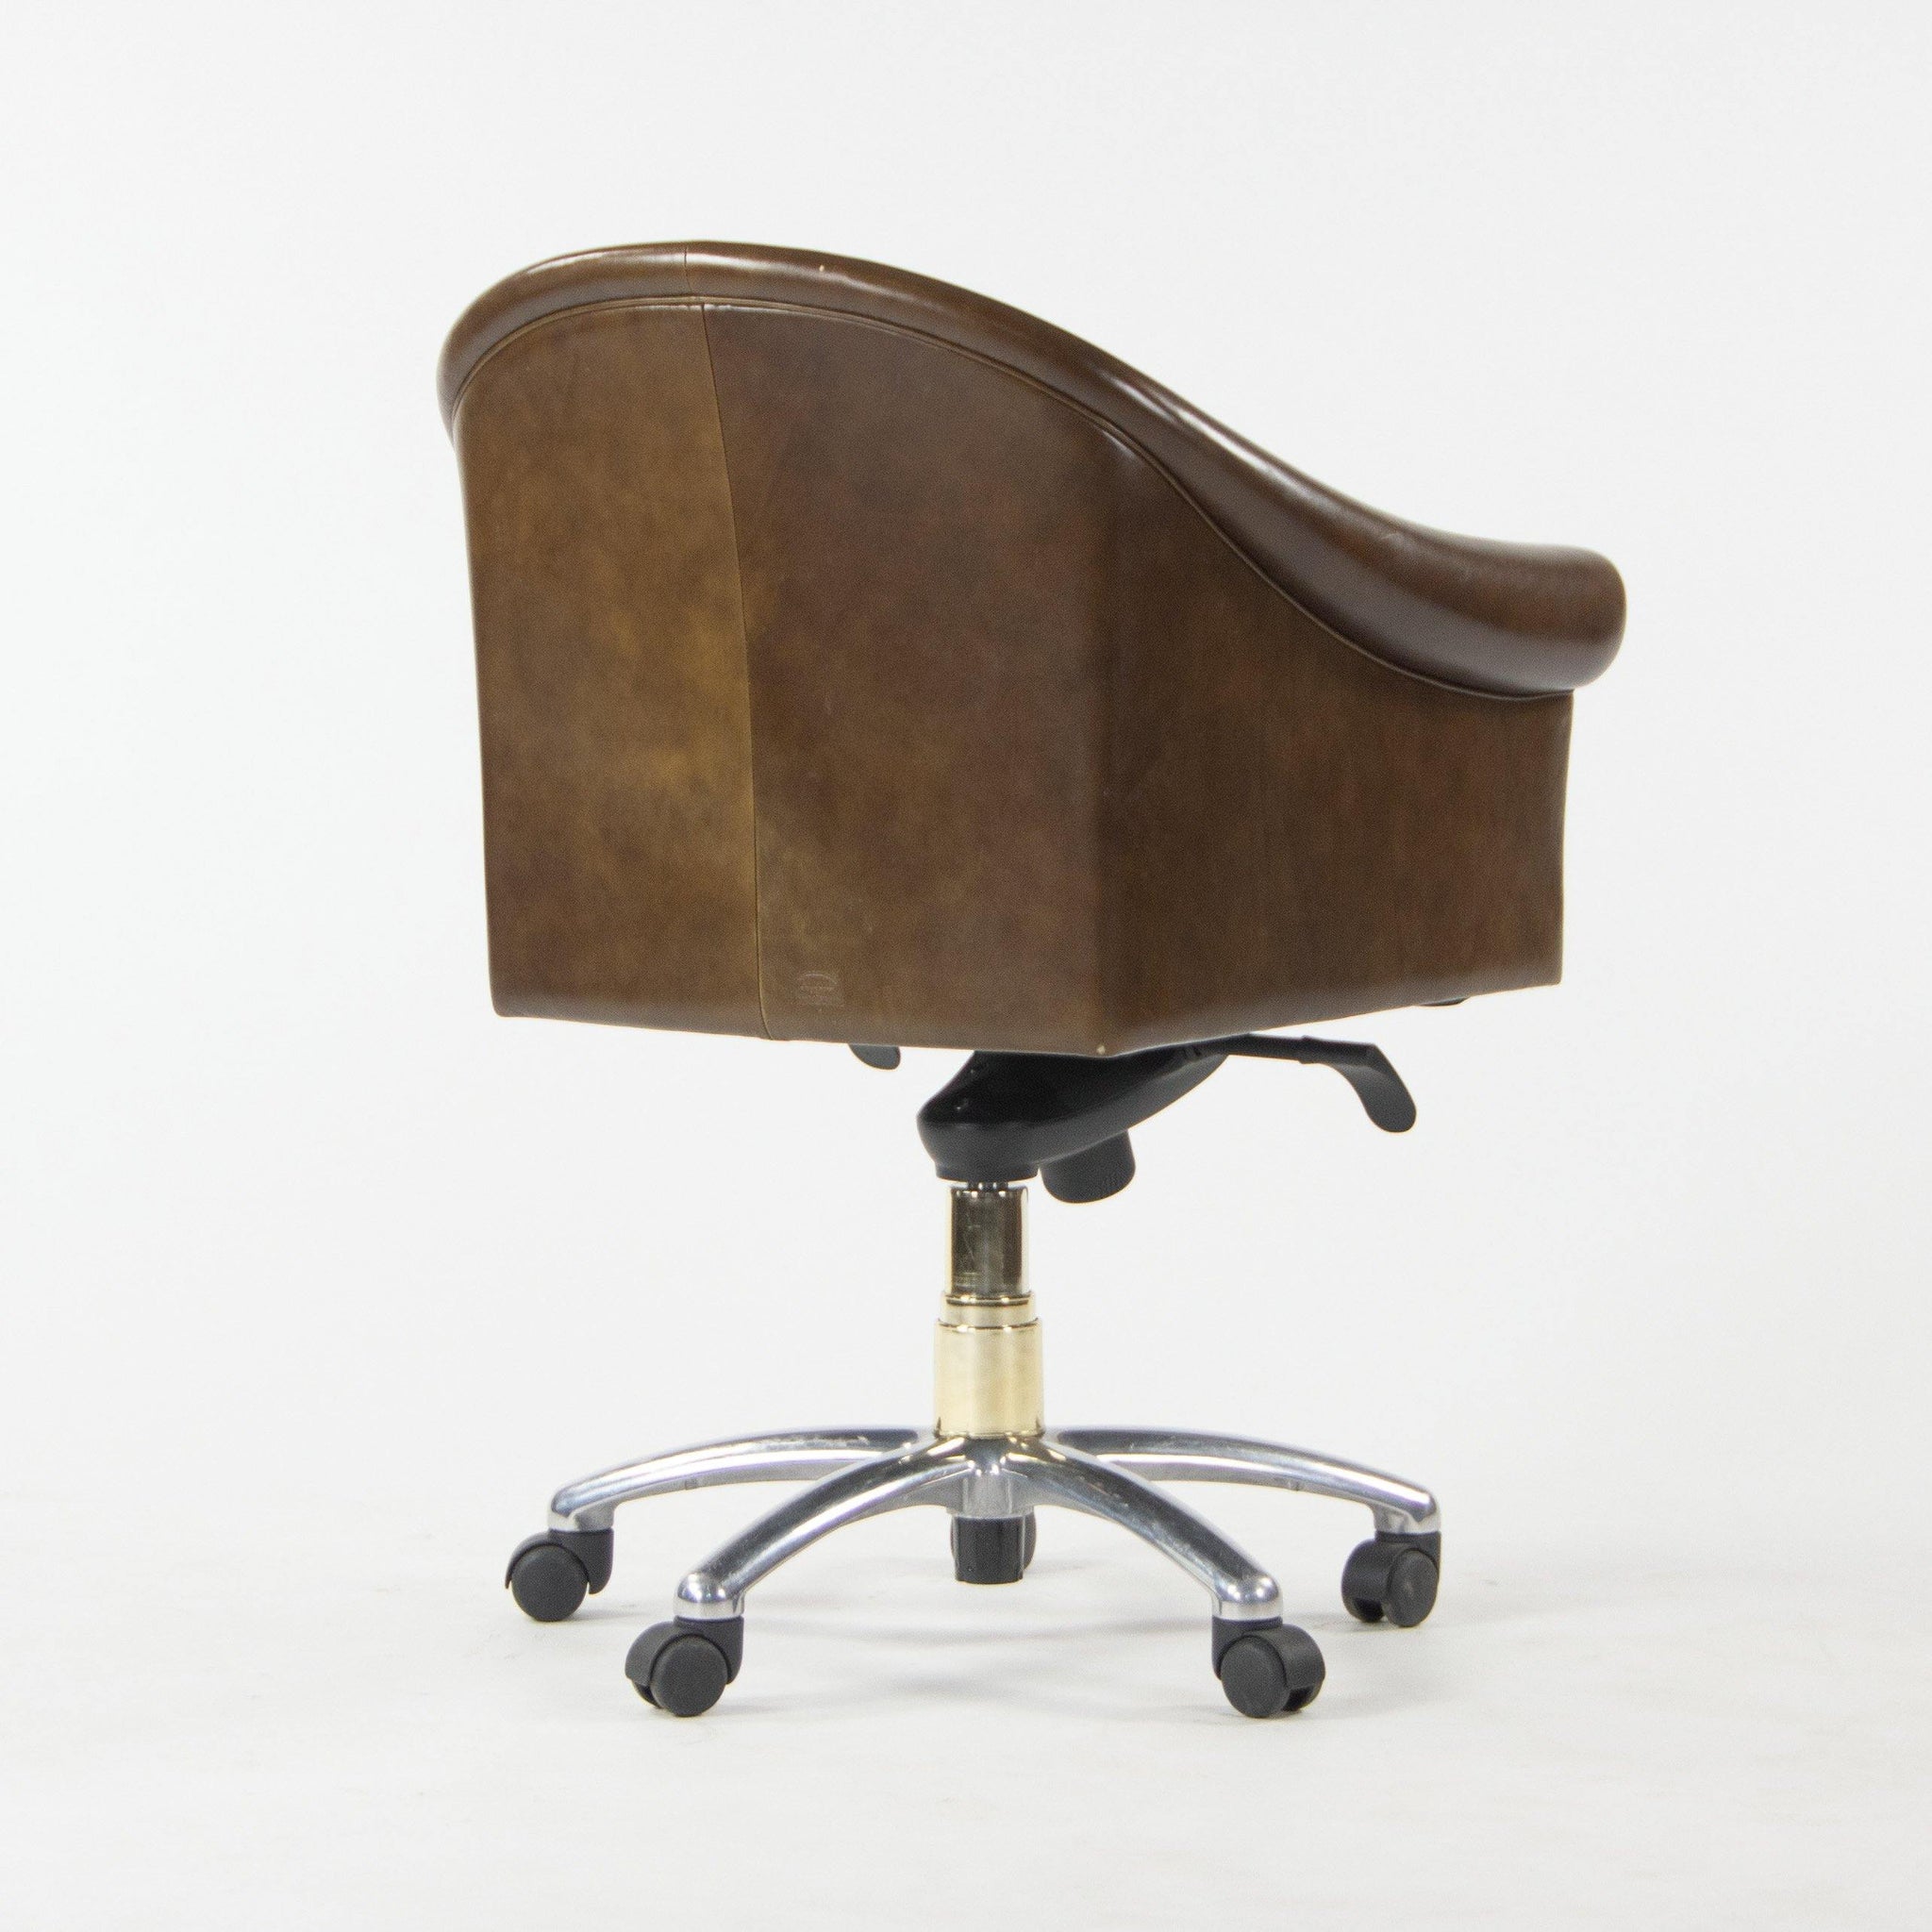 Poltrona Frau Brown Leather Luca Scacchetti Sinan Office Desk Chair Multiples Available - Rarify Inc.